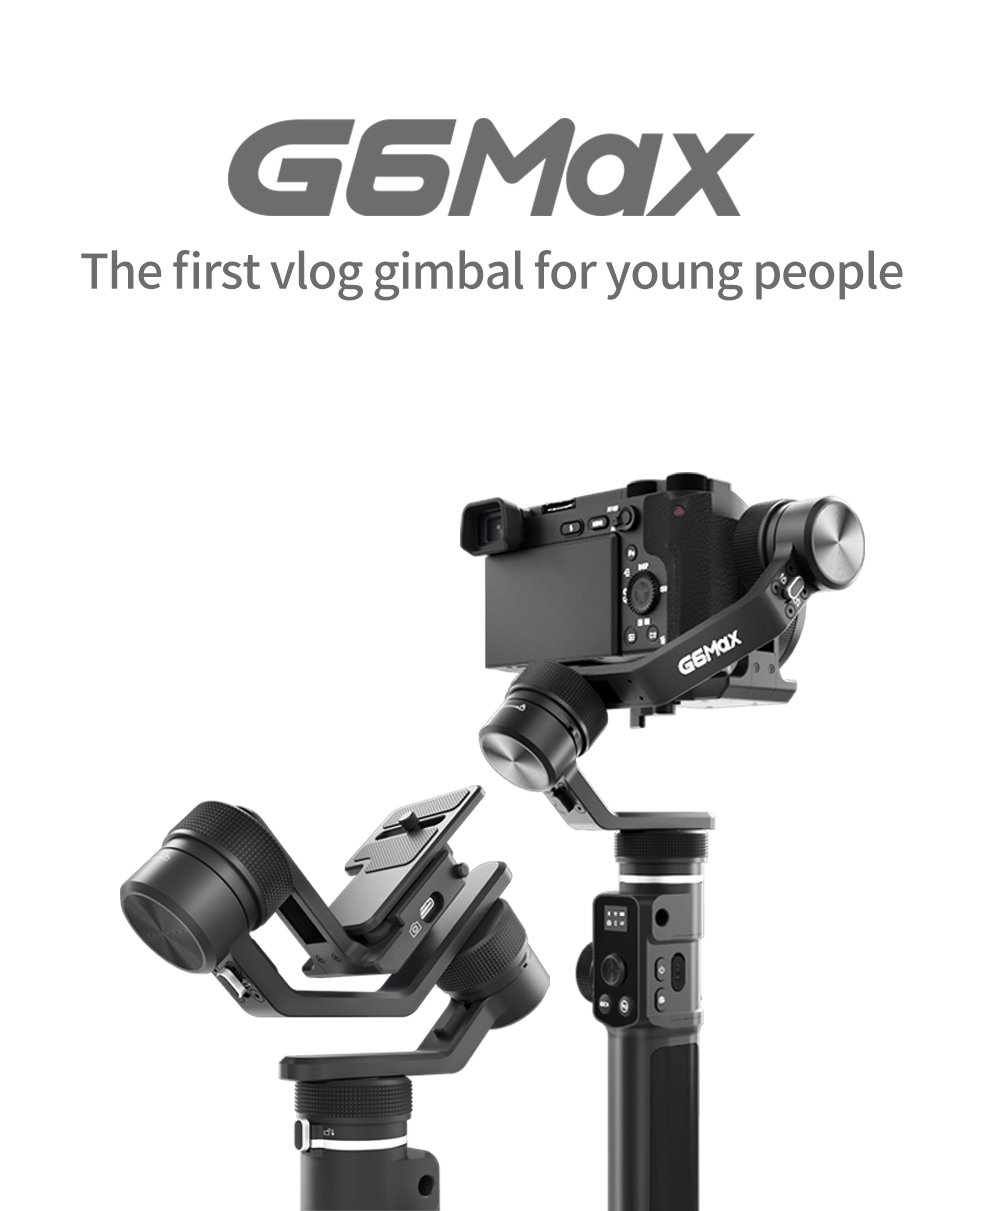 Feiyu G6 Max Gimbal Overview 01